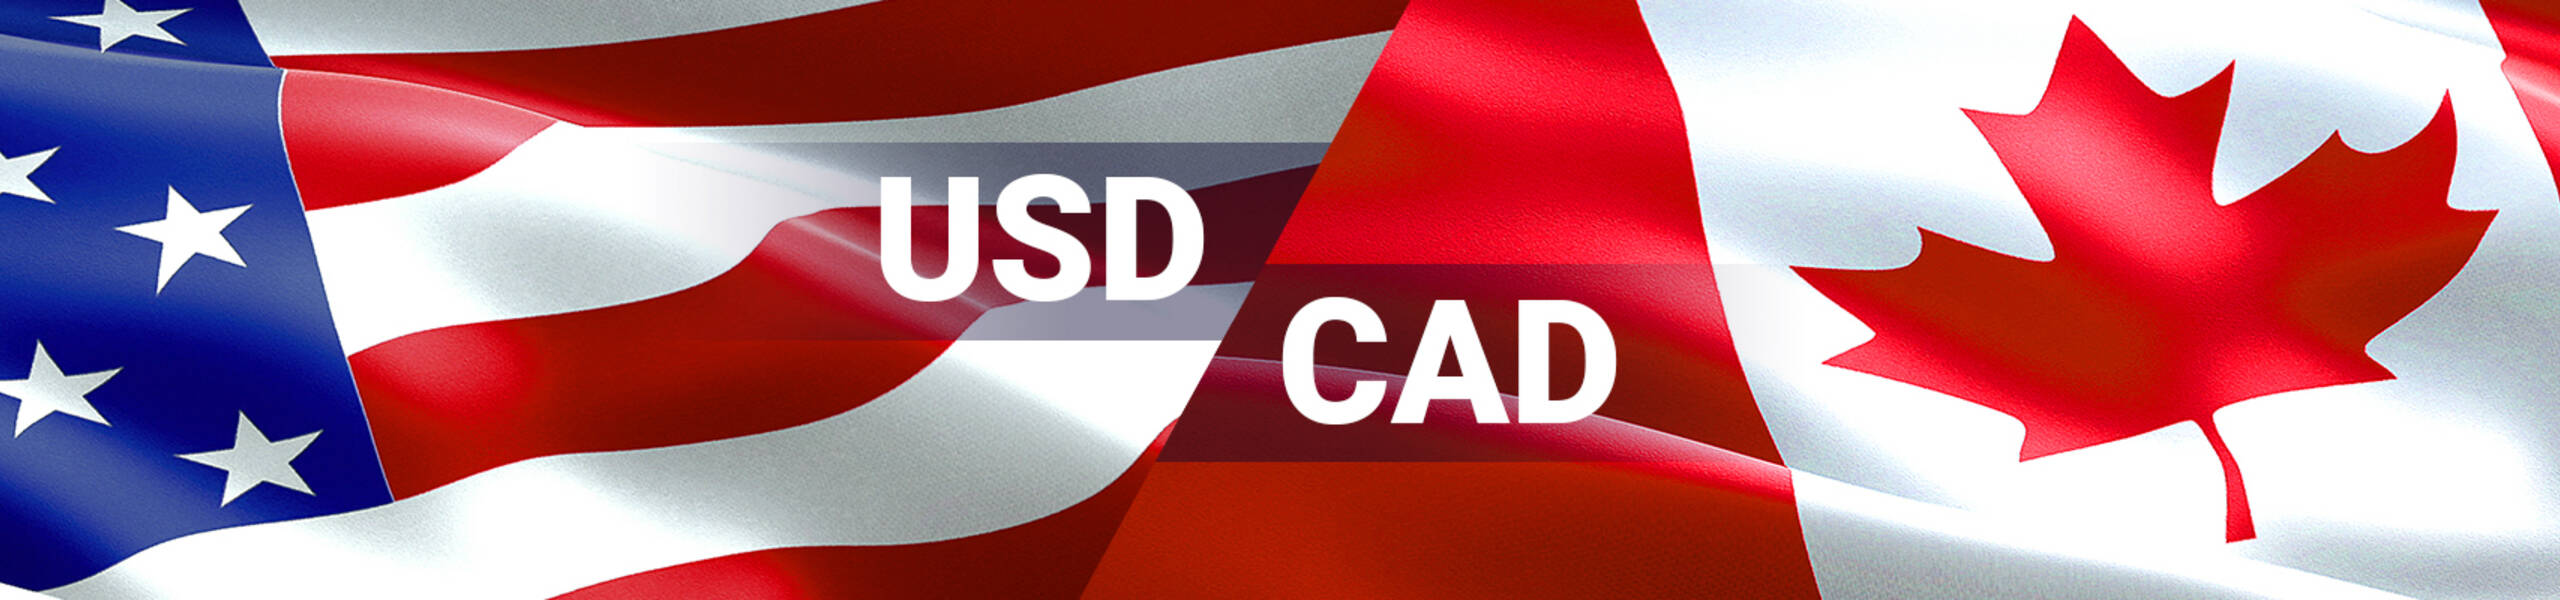 USD/CAD broke key support level 1.2770